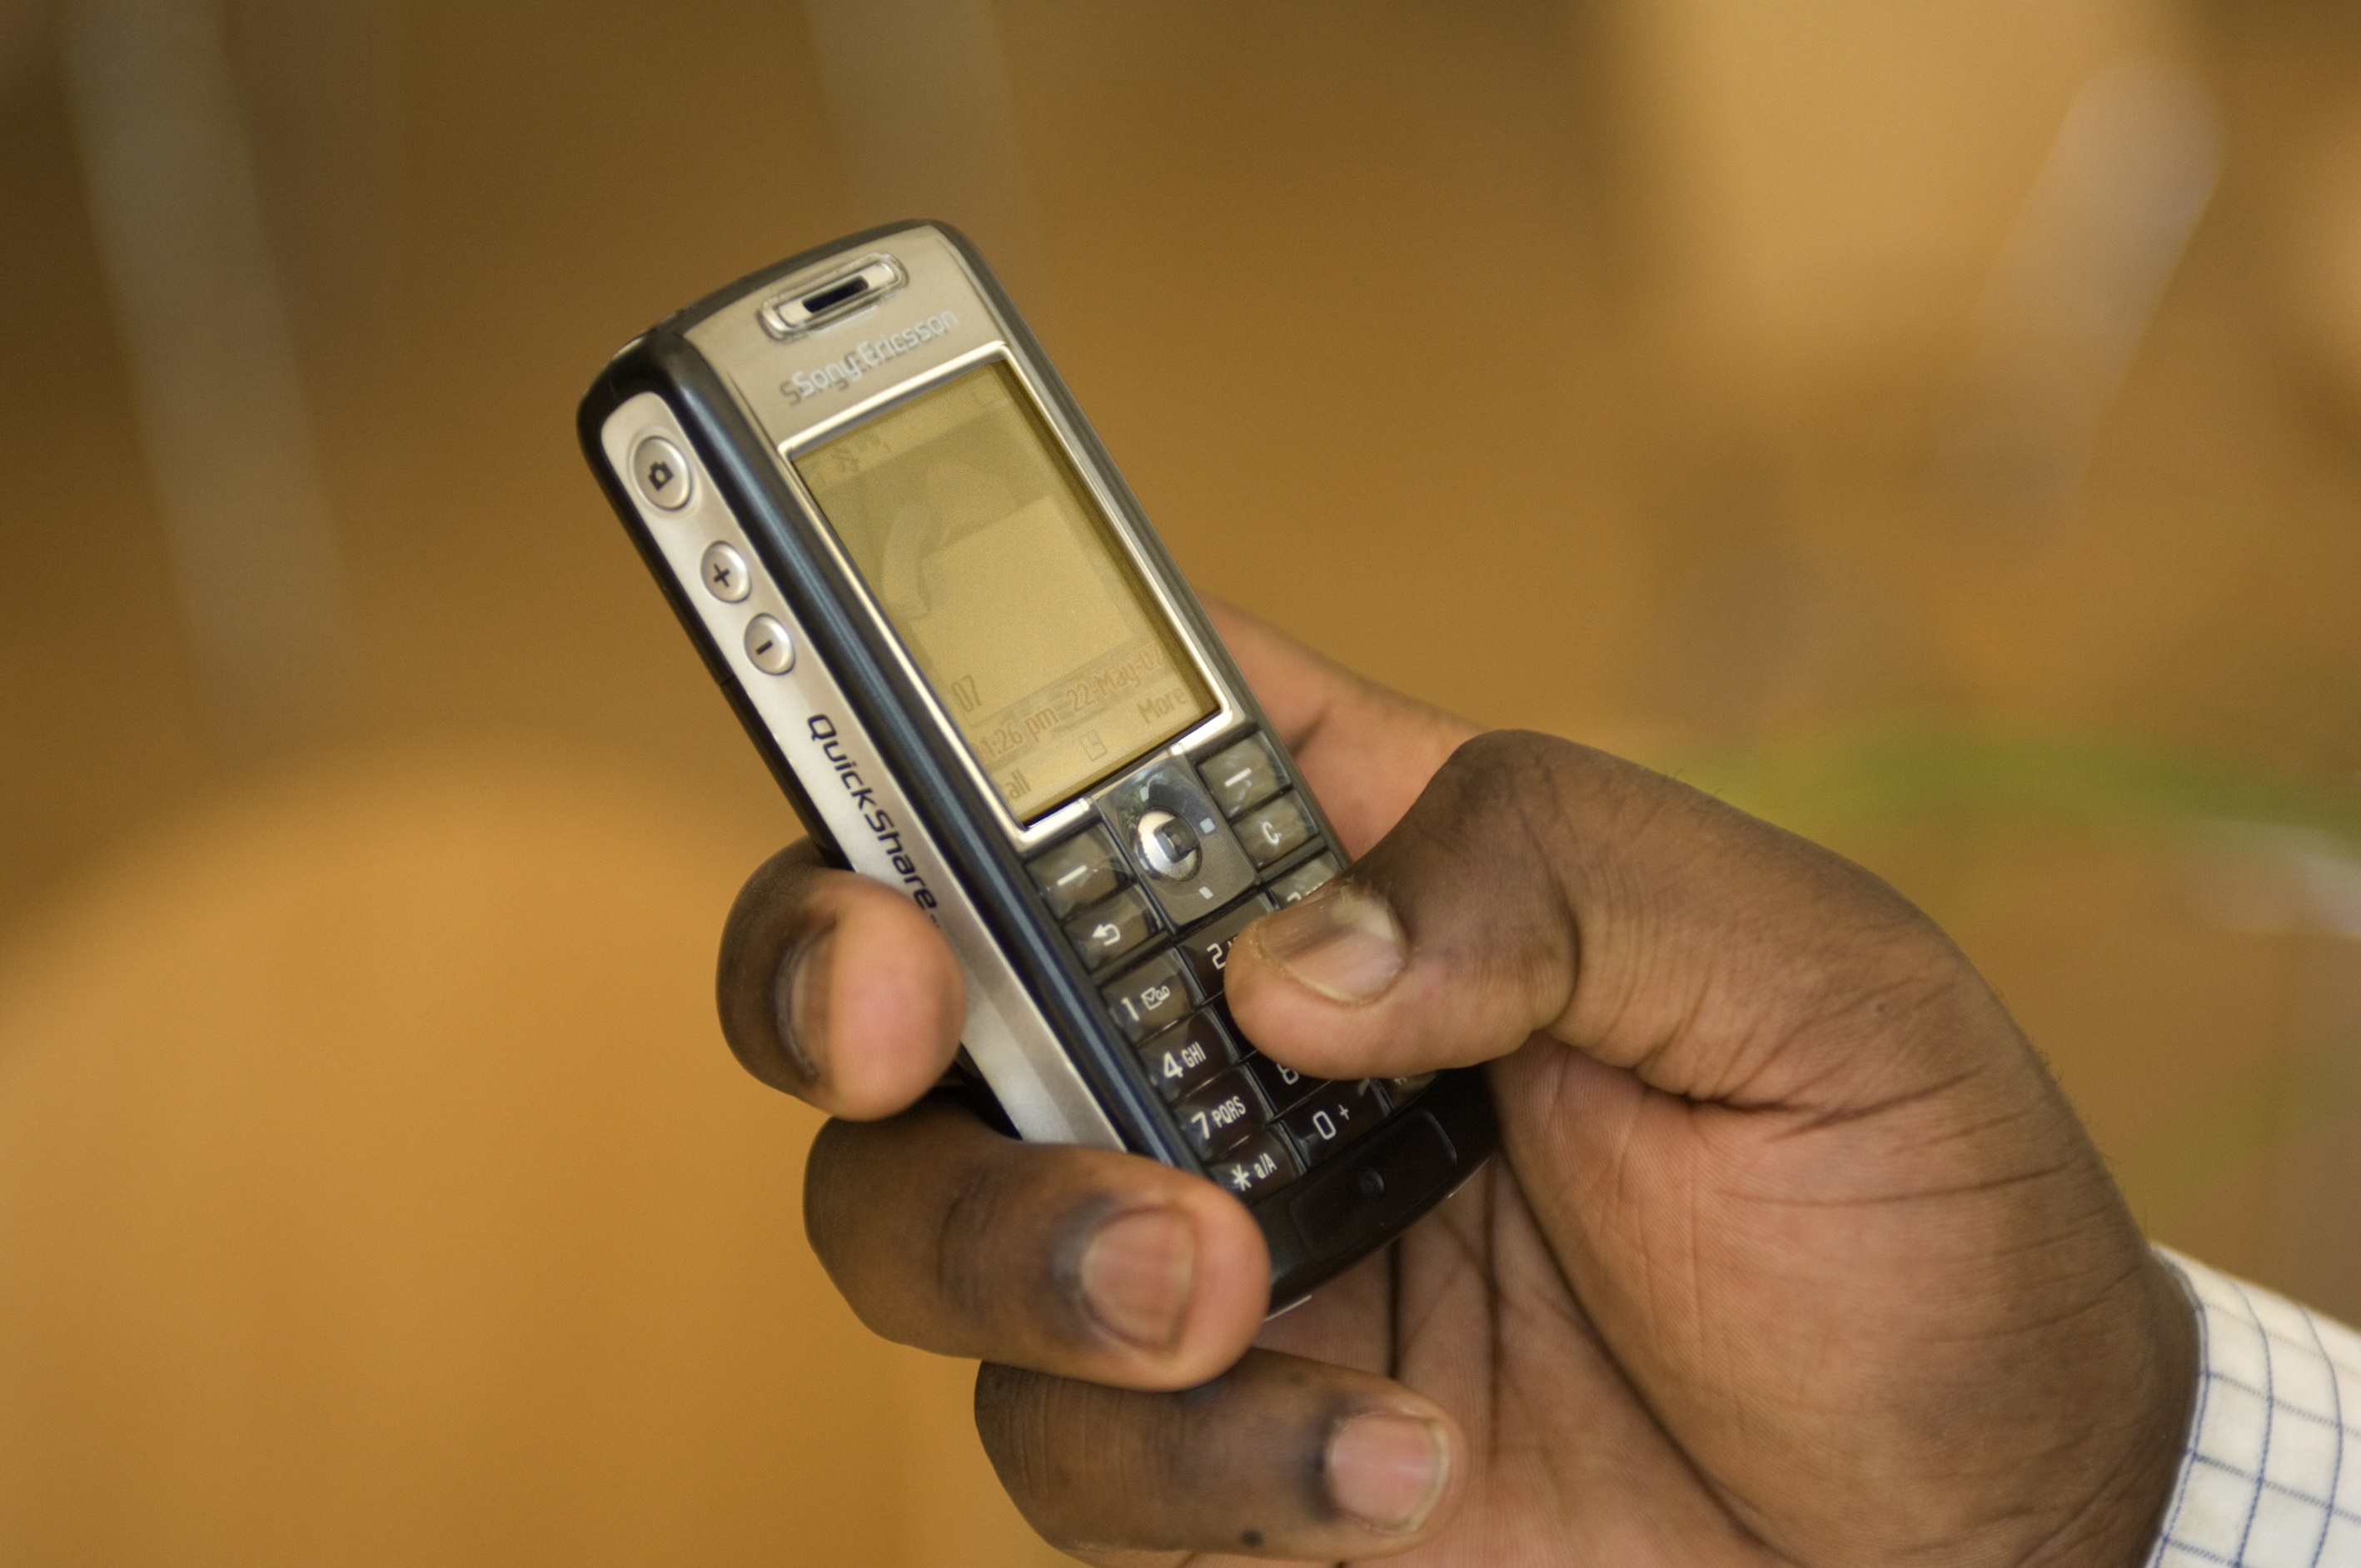 Mobile phone in Kenya in 2008.